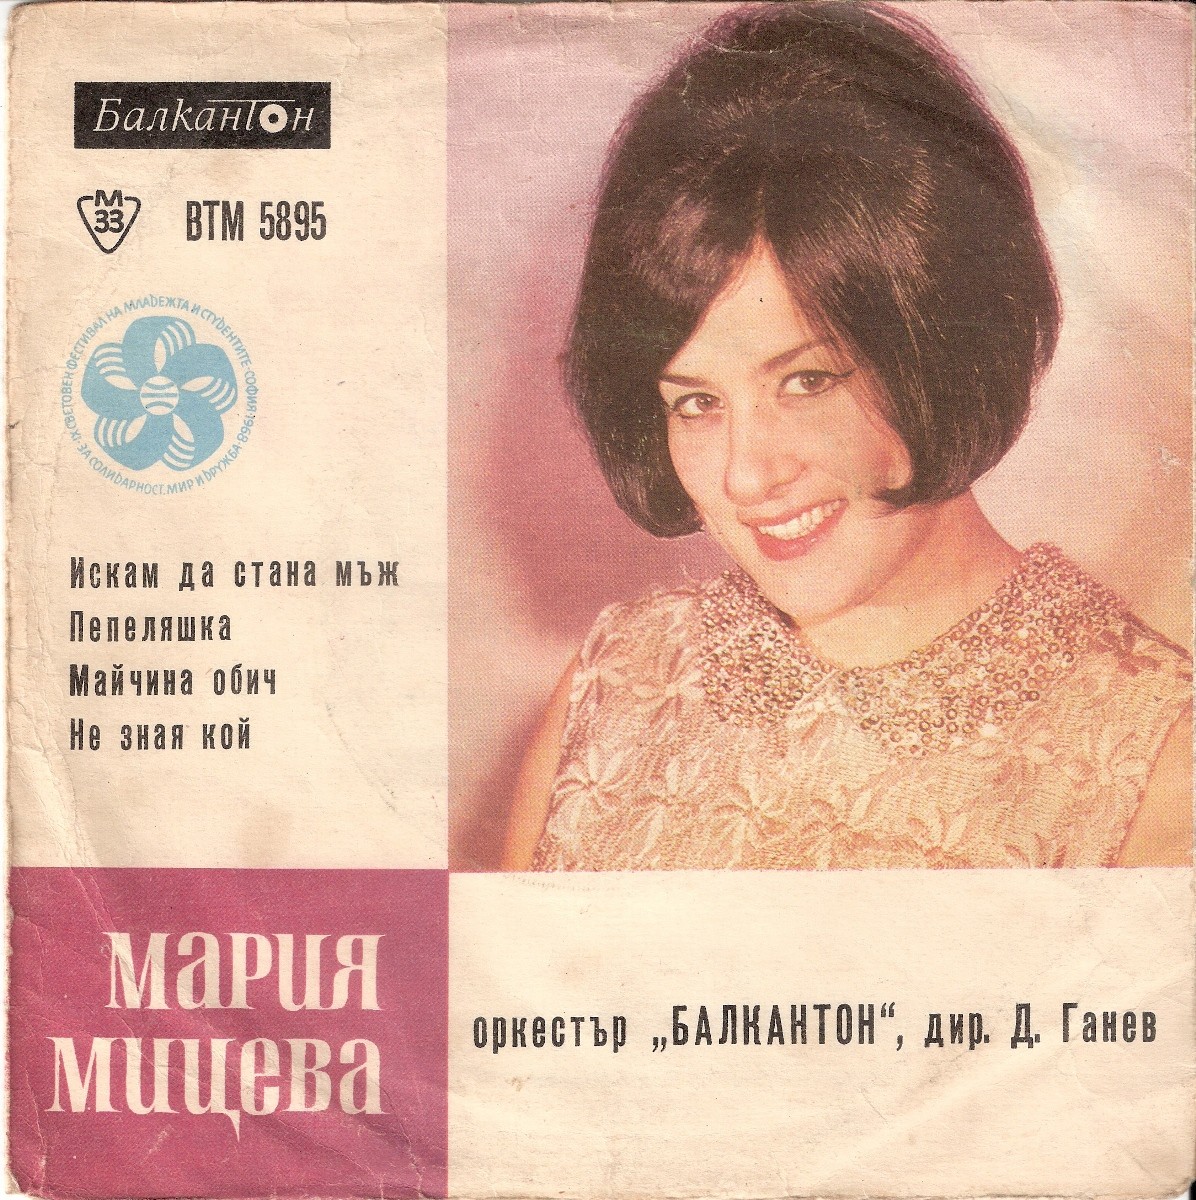 Пее Мария МИЦЕВА